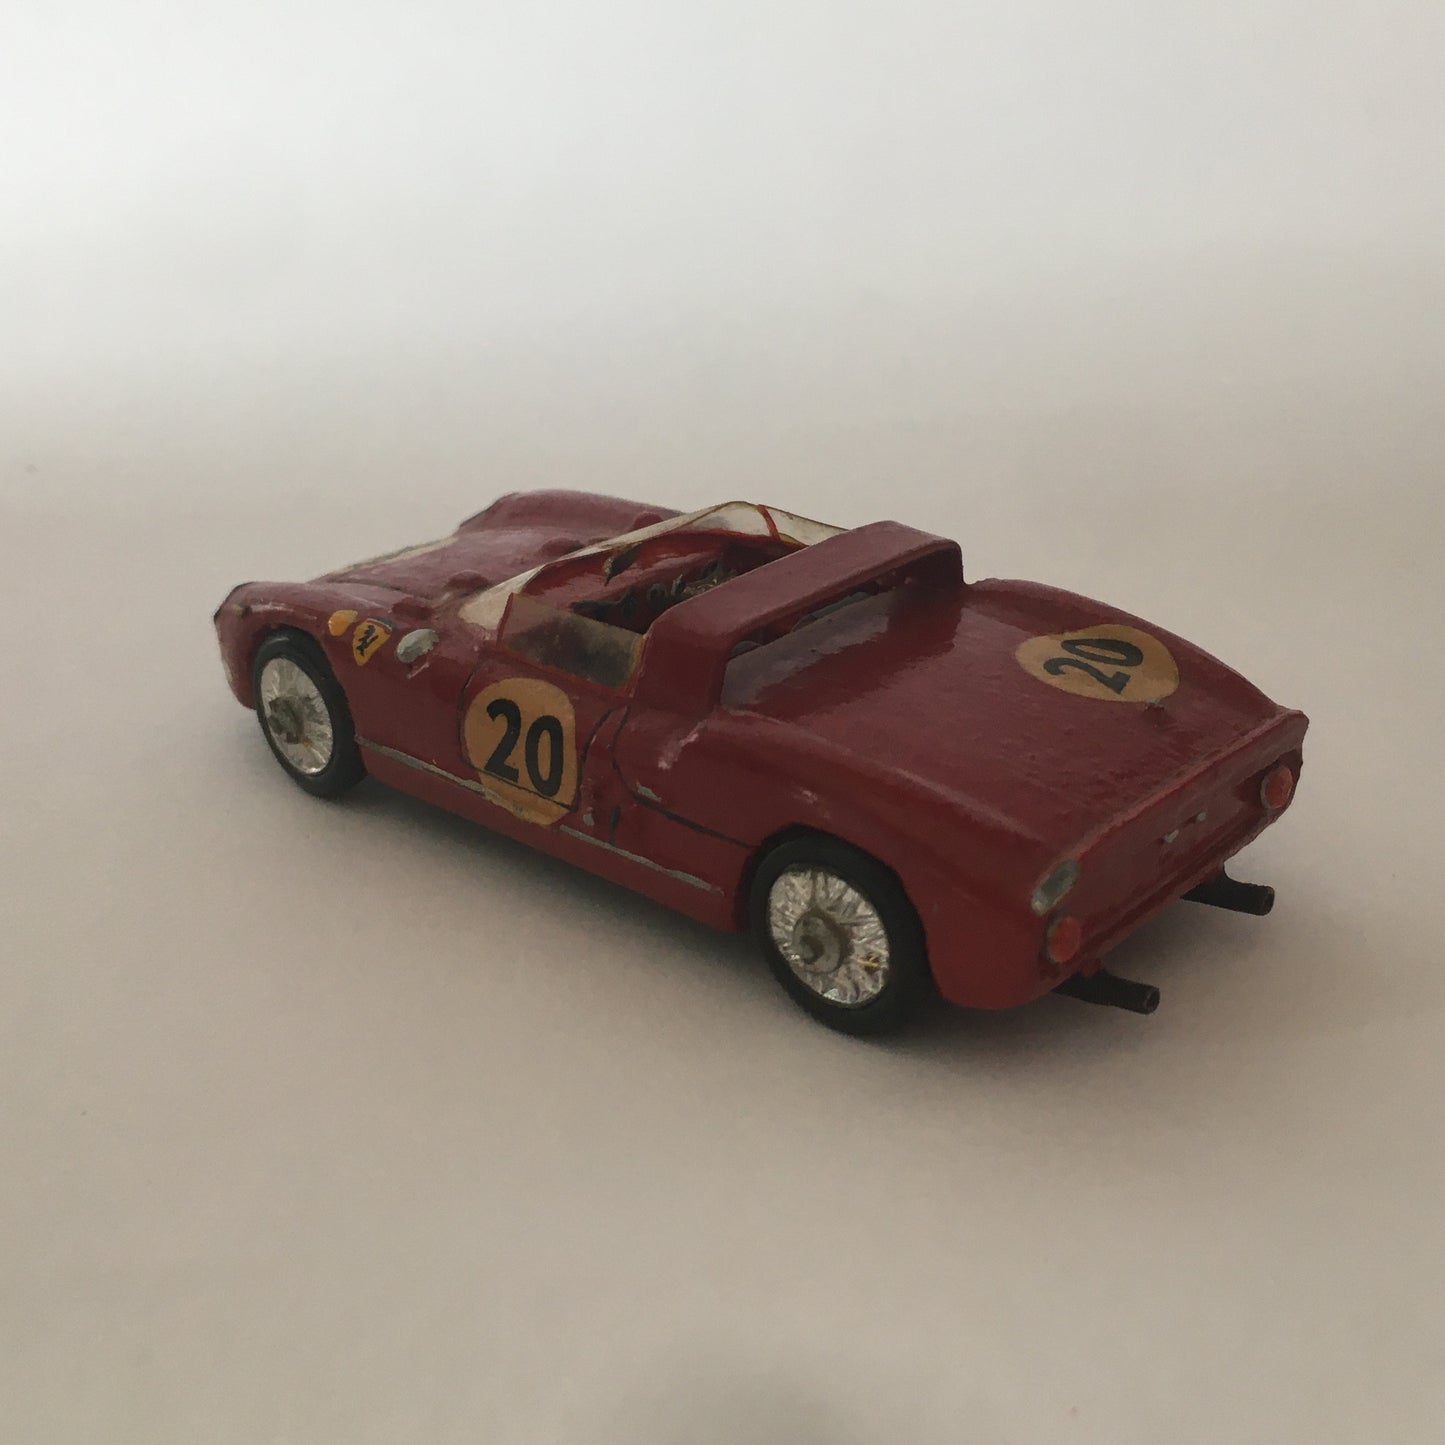 Ferrari, Handcrafted Model in Balsa Wood RD Marmande Ferrari 275 P Year 1965 Number Series 11 Scale 1:43